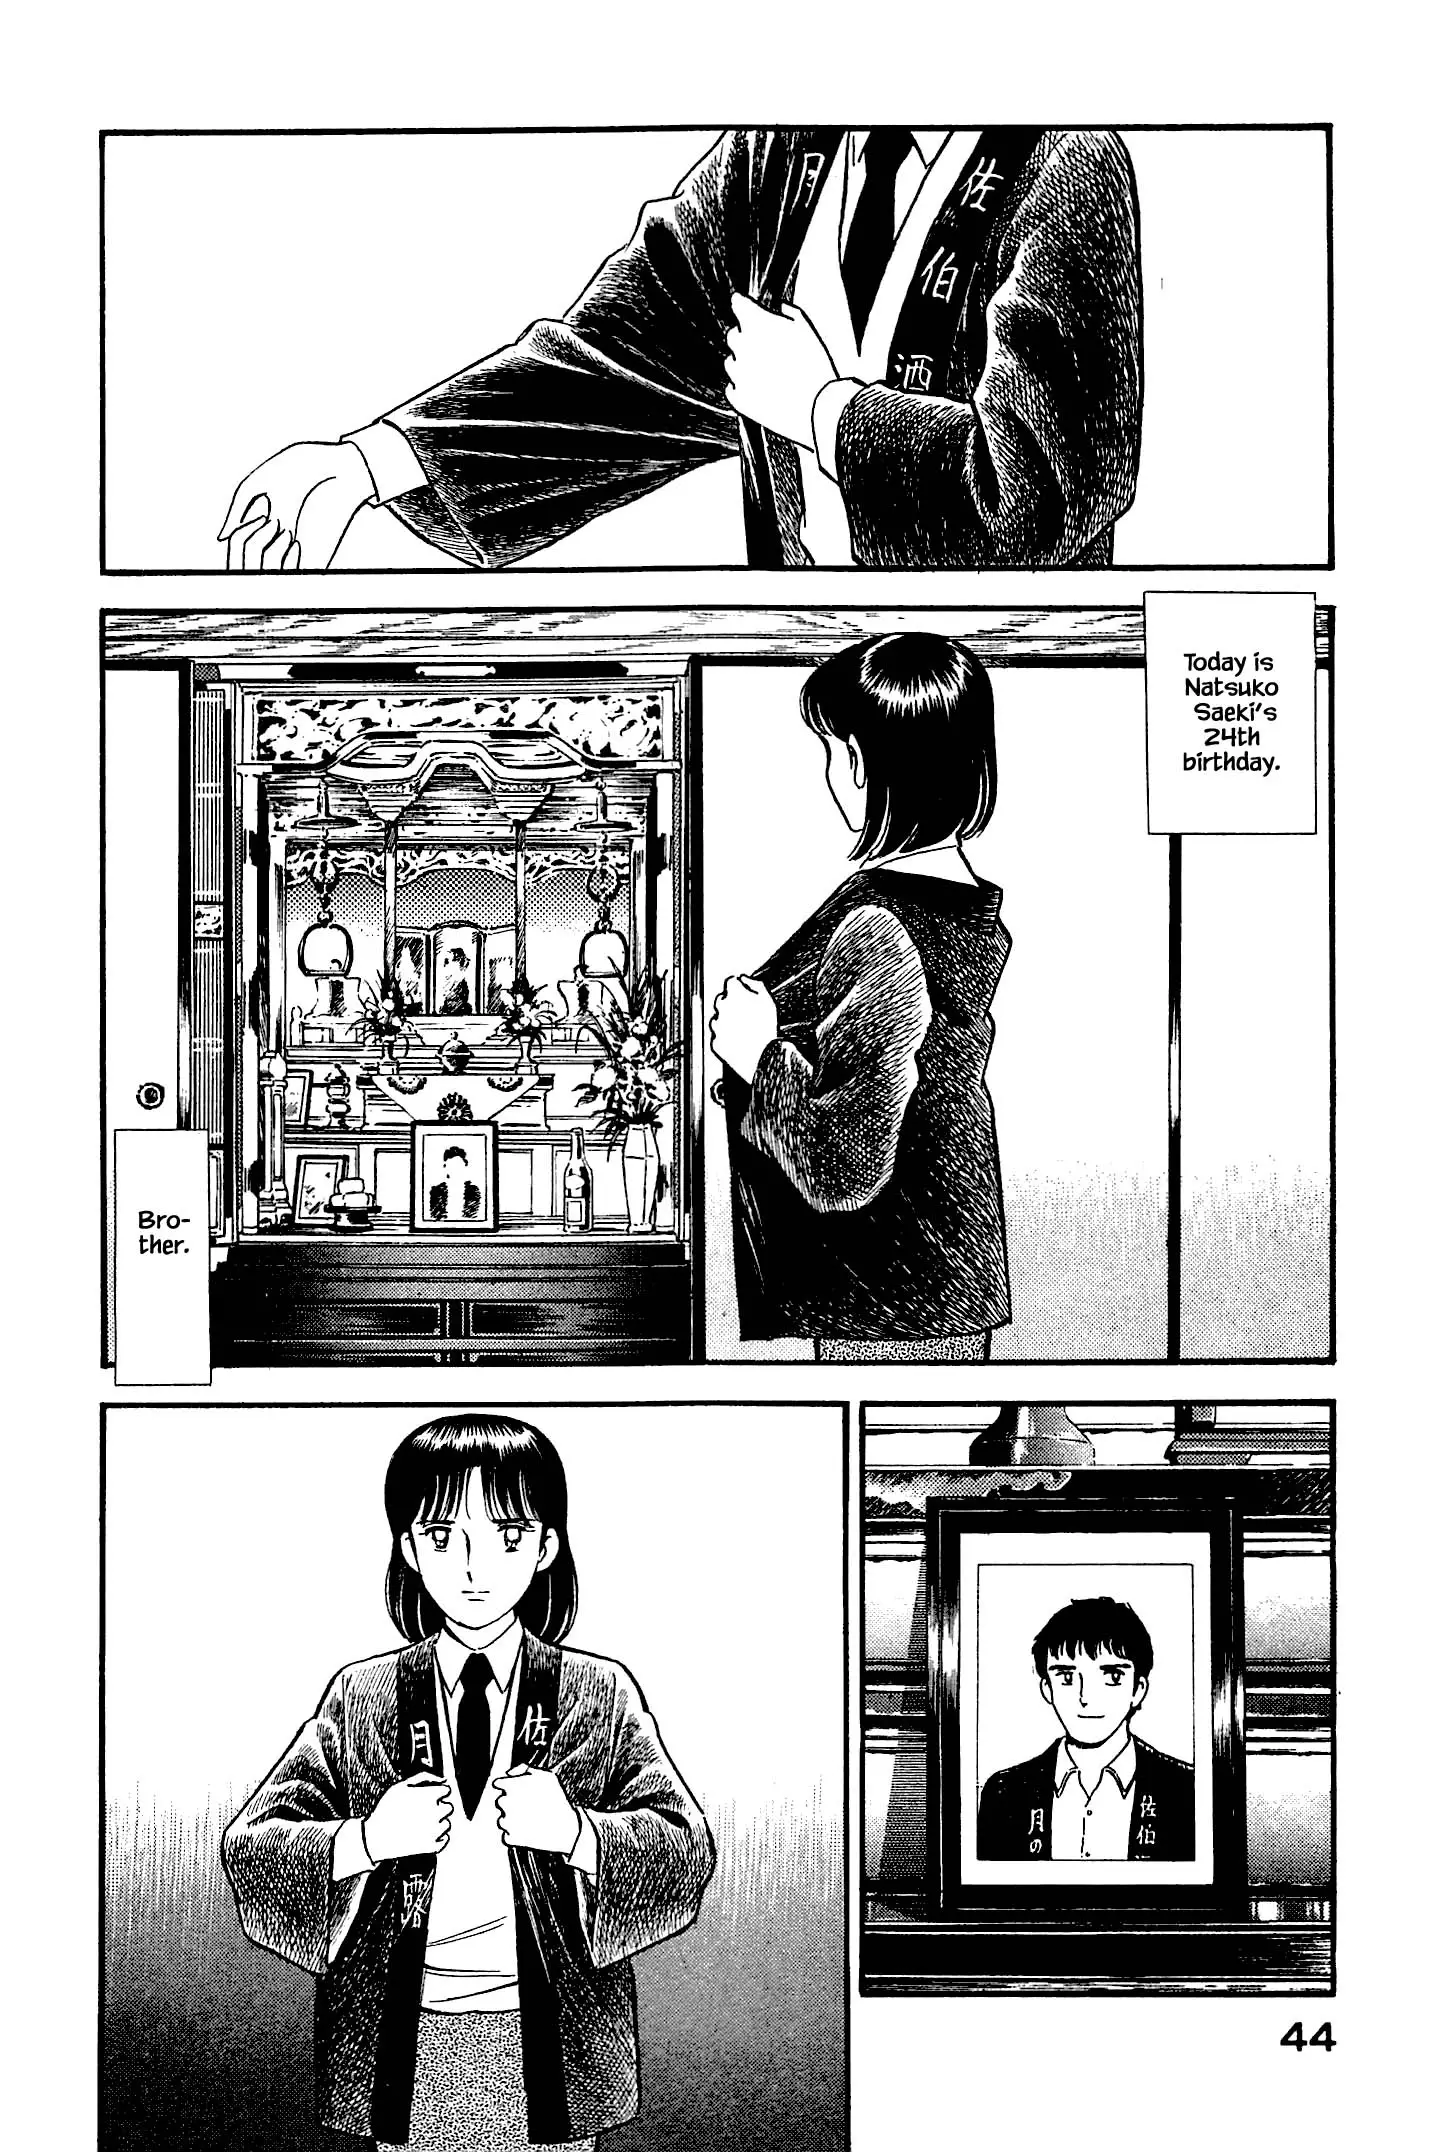 Natsuko's Sake - 123 page 4-4347665c